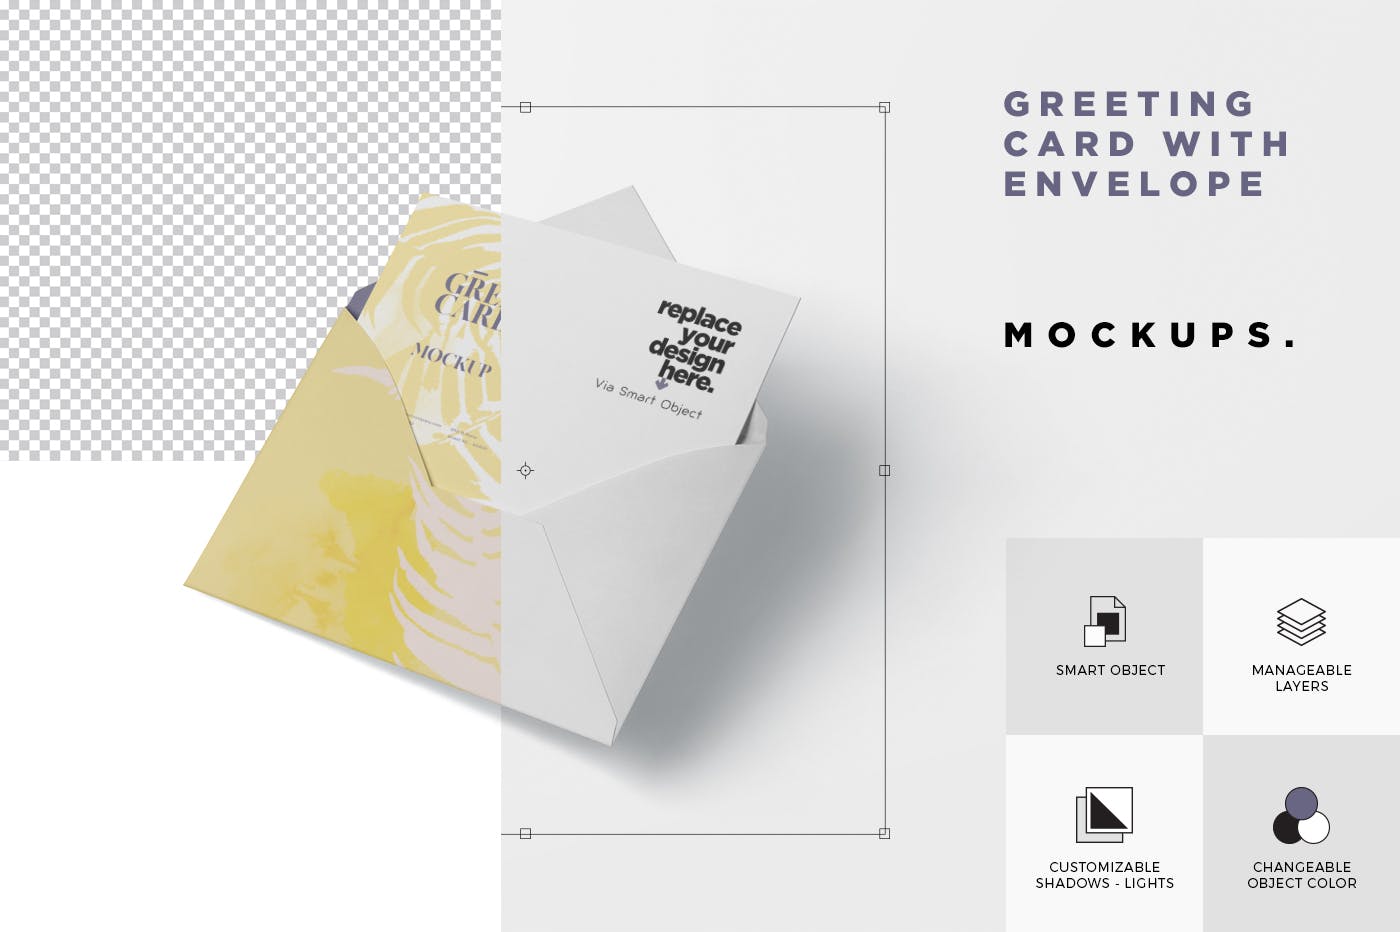 高端企业信封&贺卡设计图蚂蚁素材精选 Greeting Card Mockup with Envelope – A6 Size插图(5)